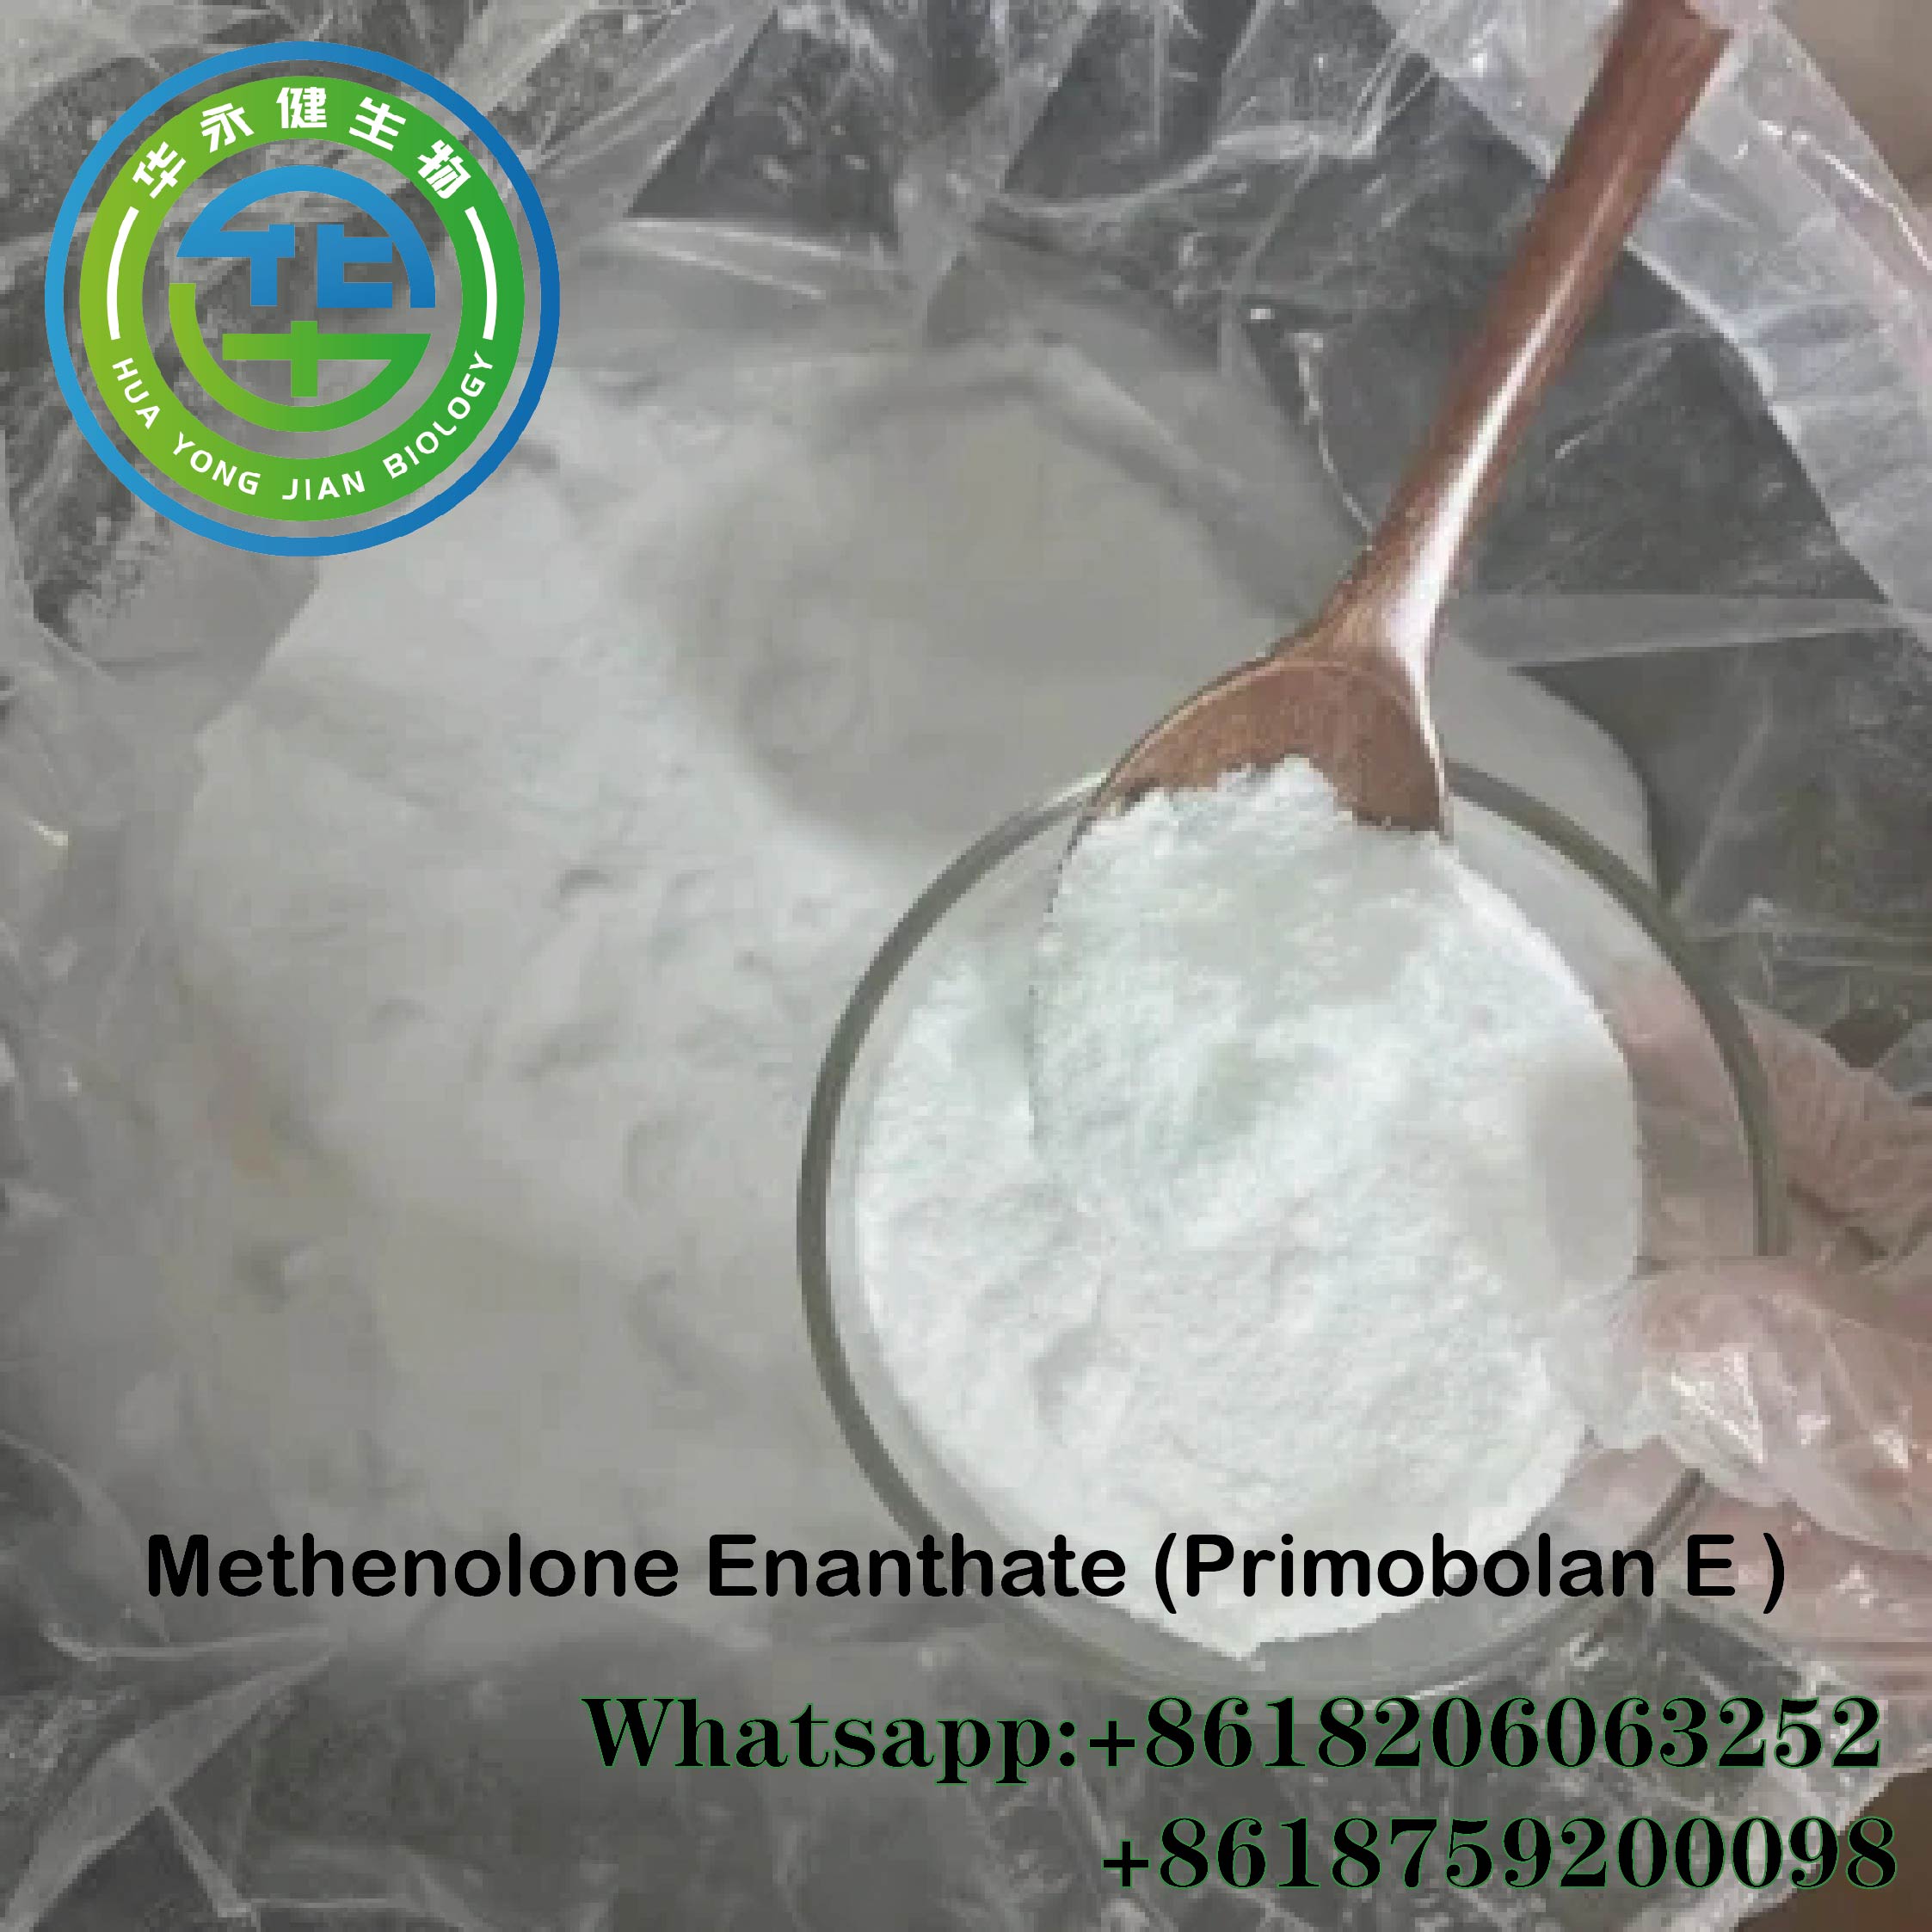 99% Pure Primobolan E Steroids Methenolone Enanthate Powder equipoise steroid prohormone raw powder CAS 303-42-4 